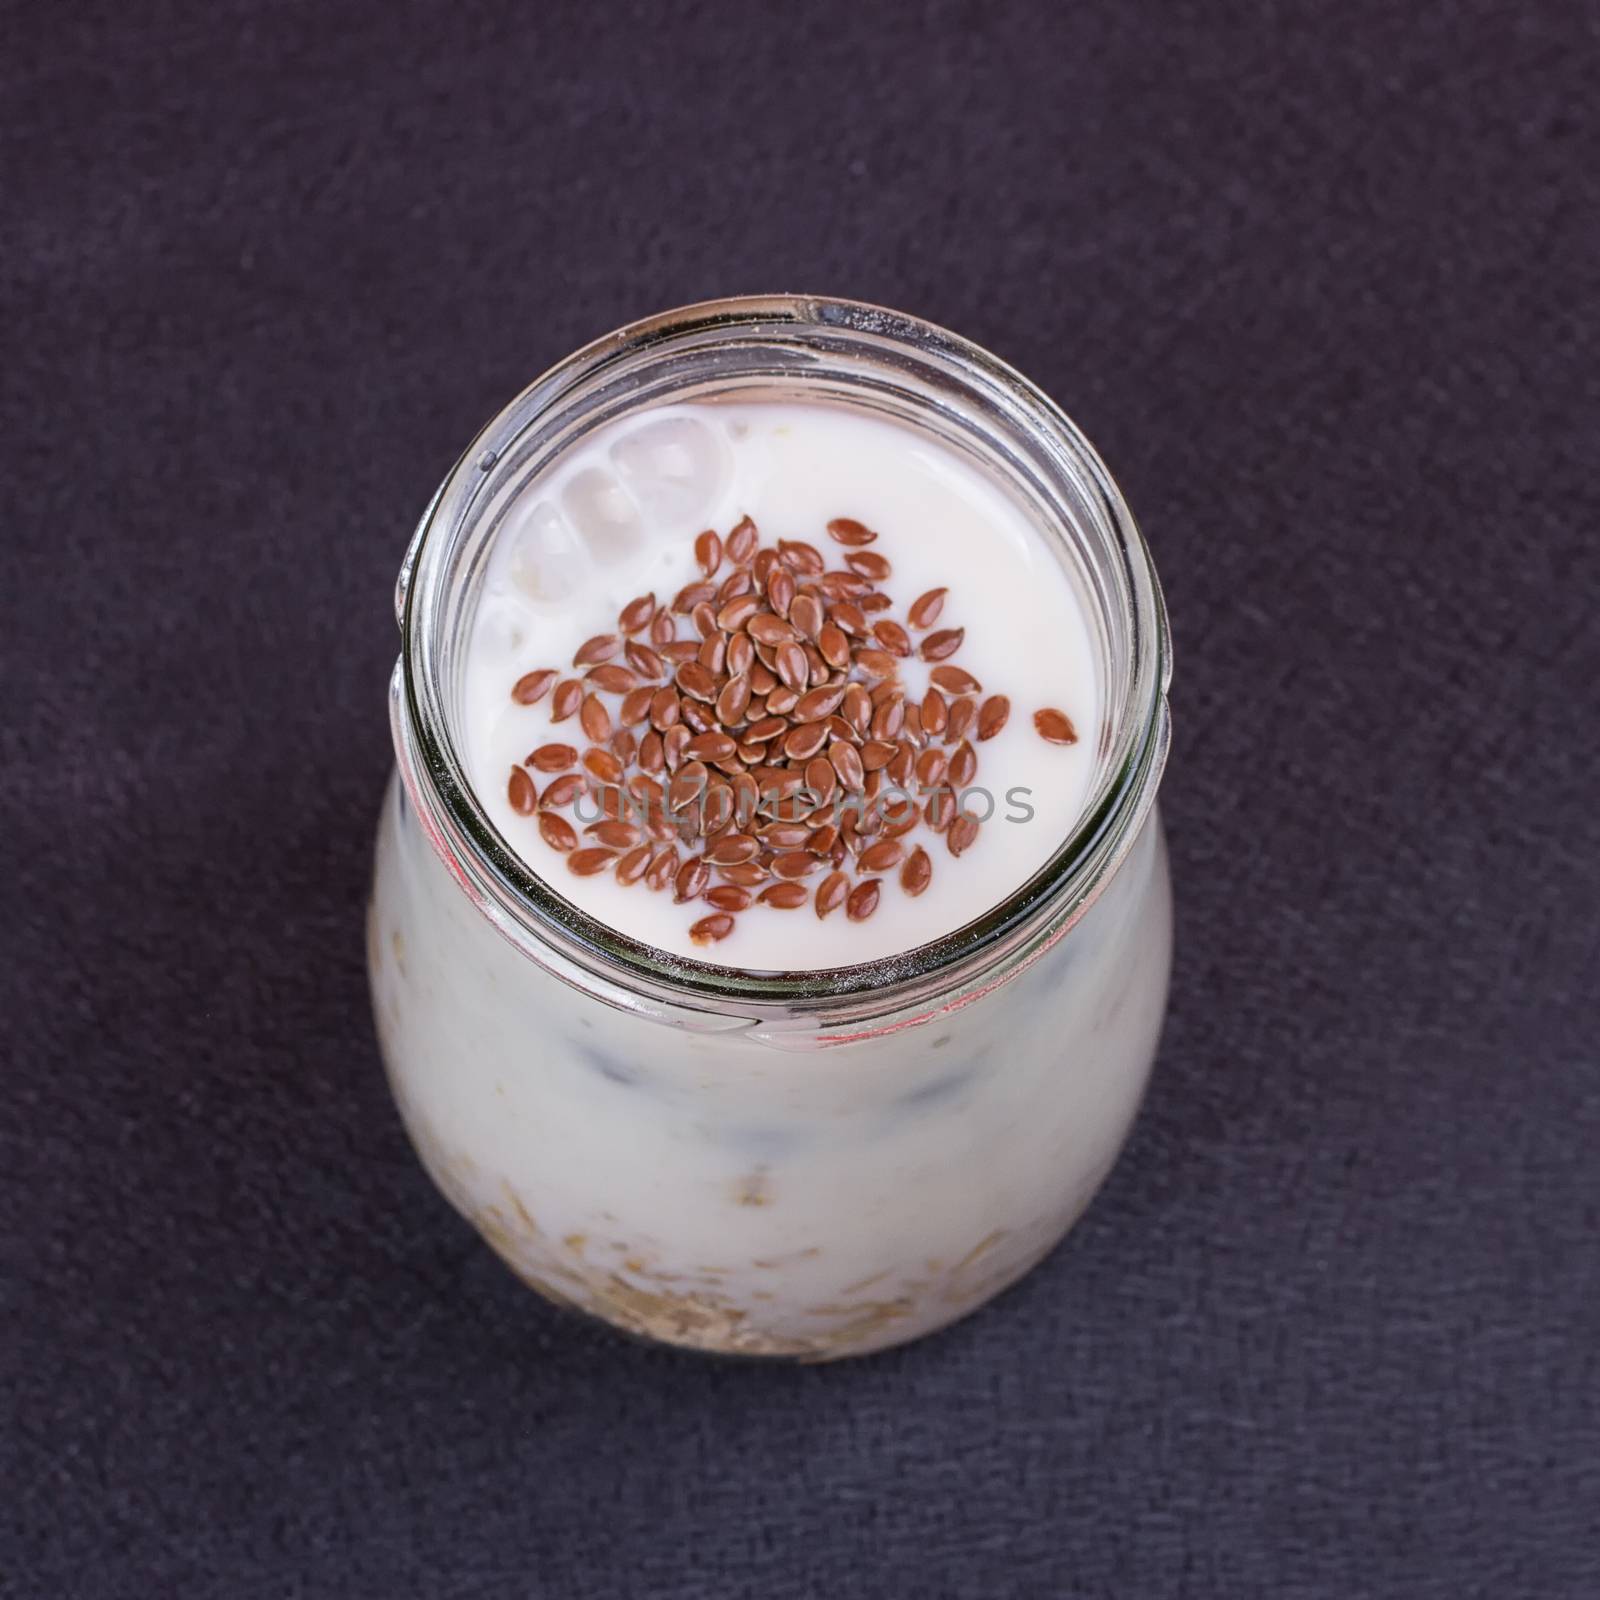 Healthy breakfast - yogurt with blueberries and muesli served in glass jar by victosha